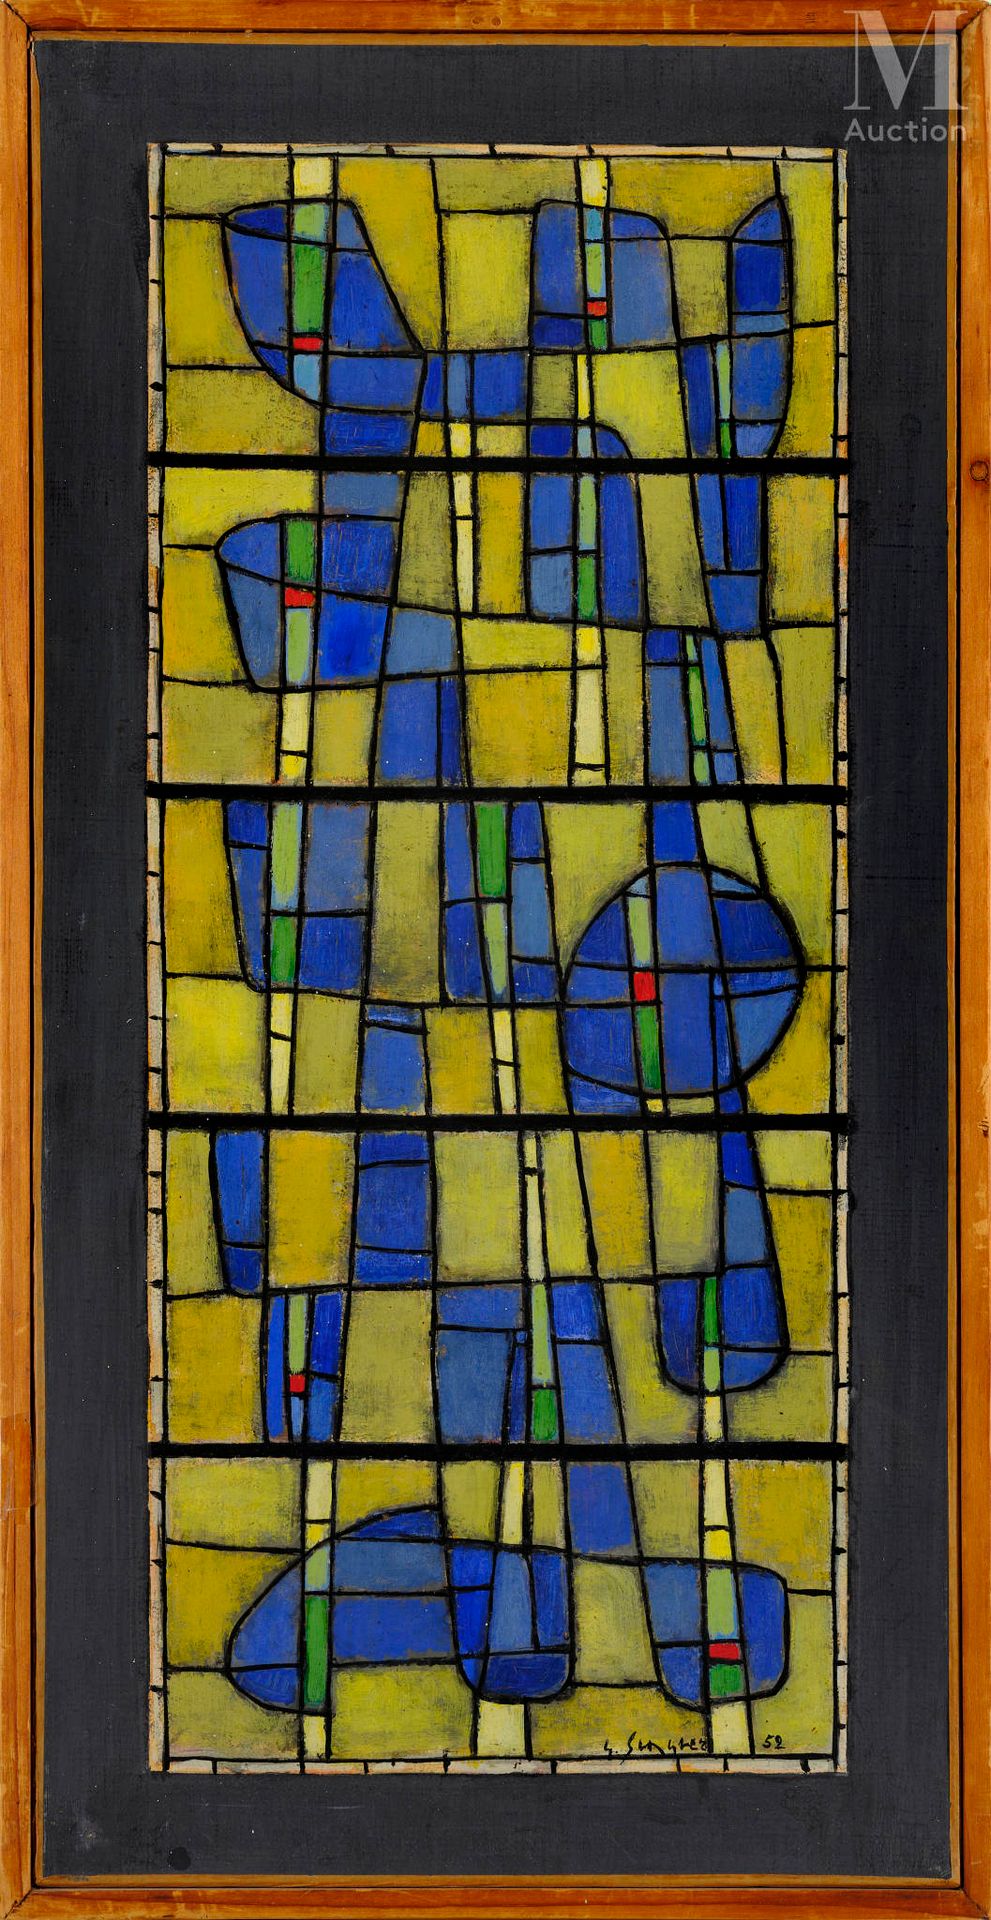 Gustave SINGIER (1909-1984) 彩绘玻璃，1952 年

纸上油画，右下方有签名和年代，裱在画布上 
32 x 64 厘米

出处 ： &hellip;